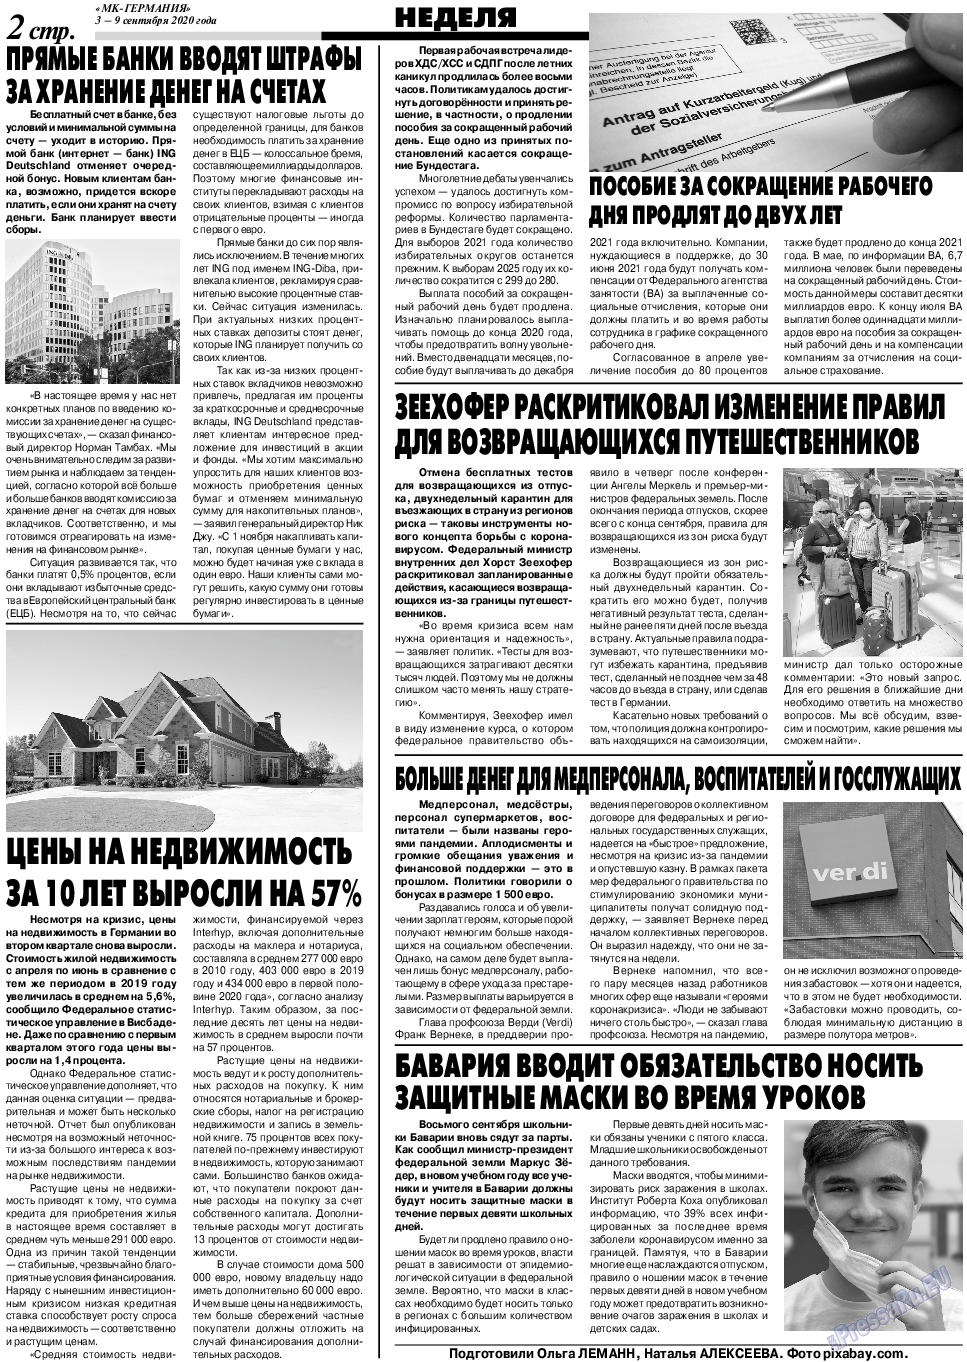 МК-Германия, газета. 2020 №36 стр.2